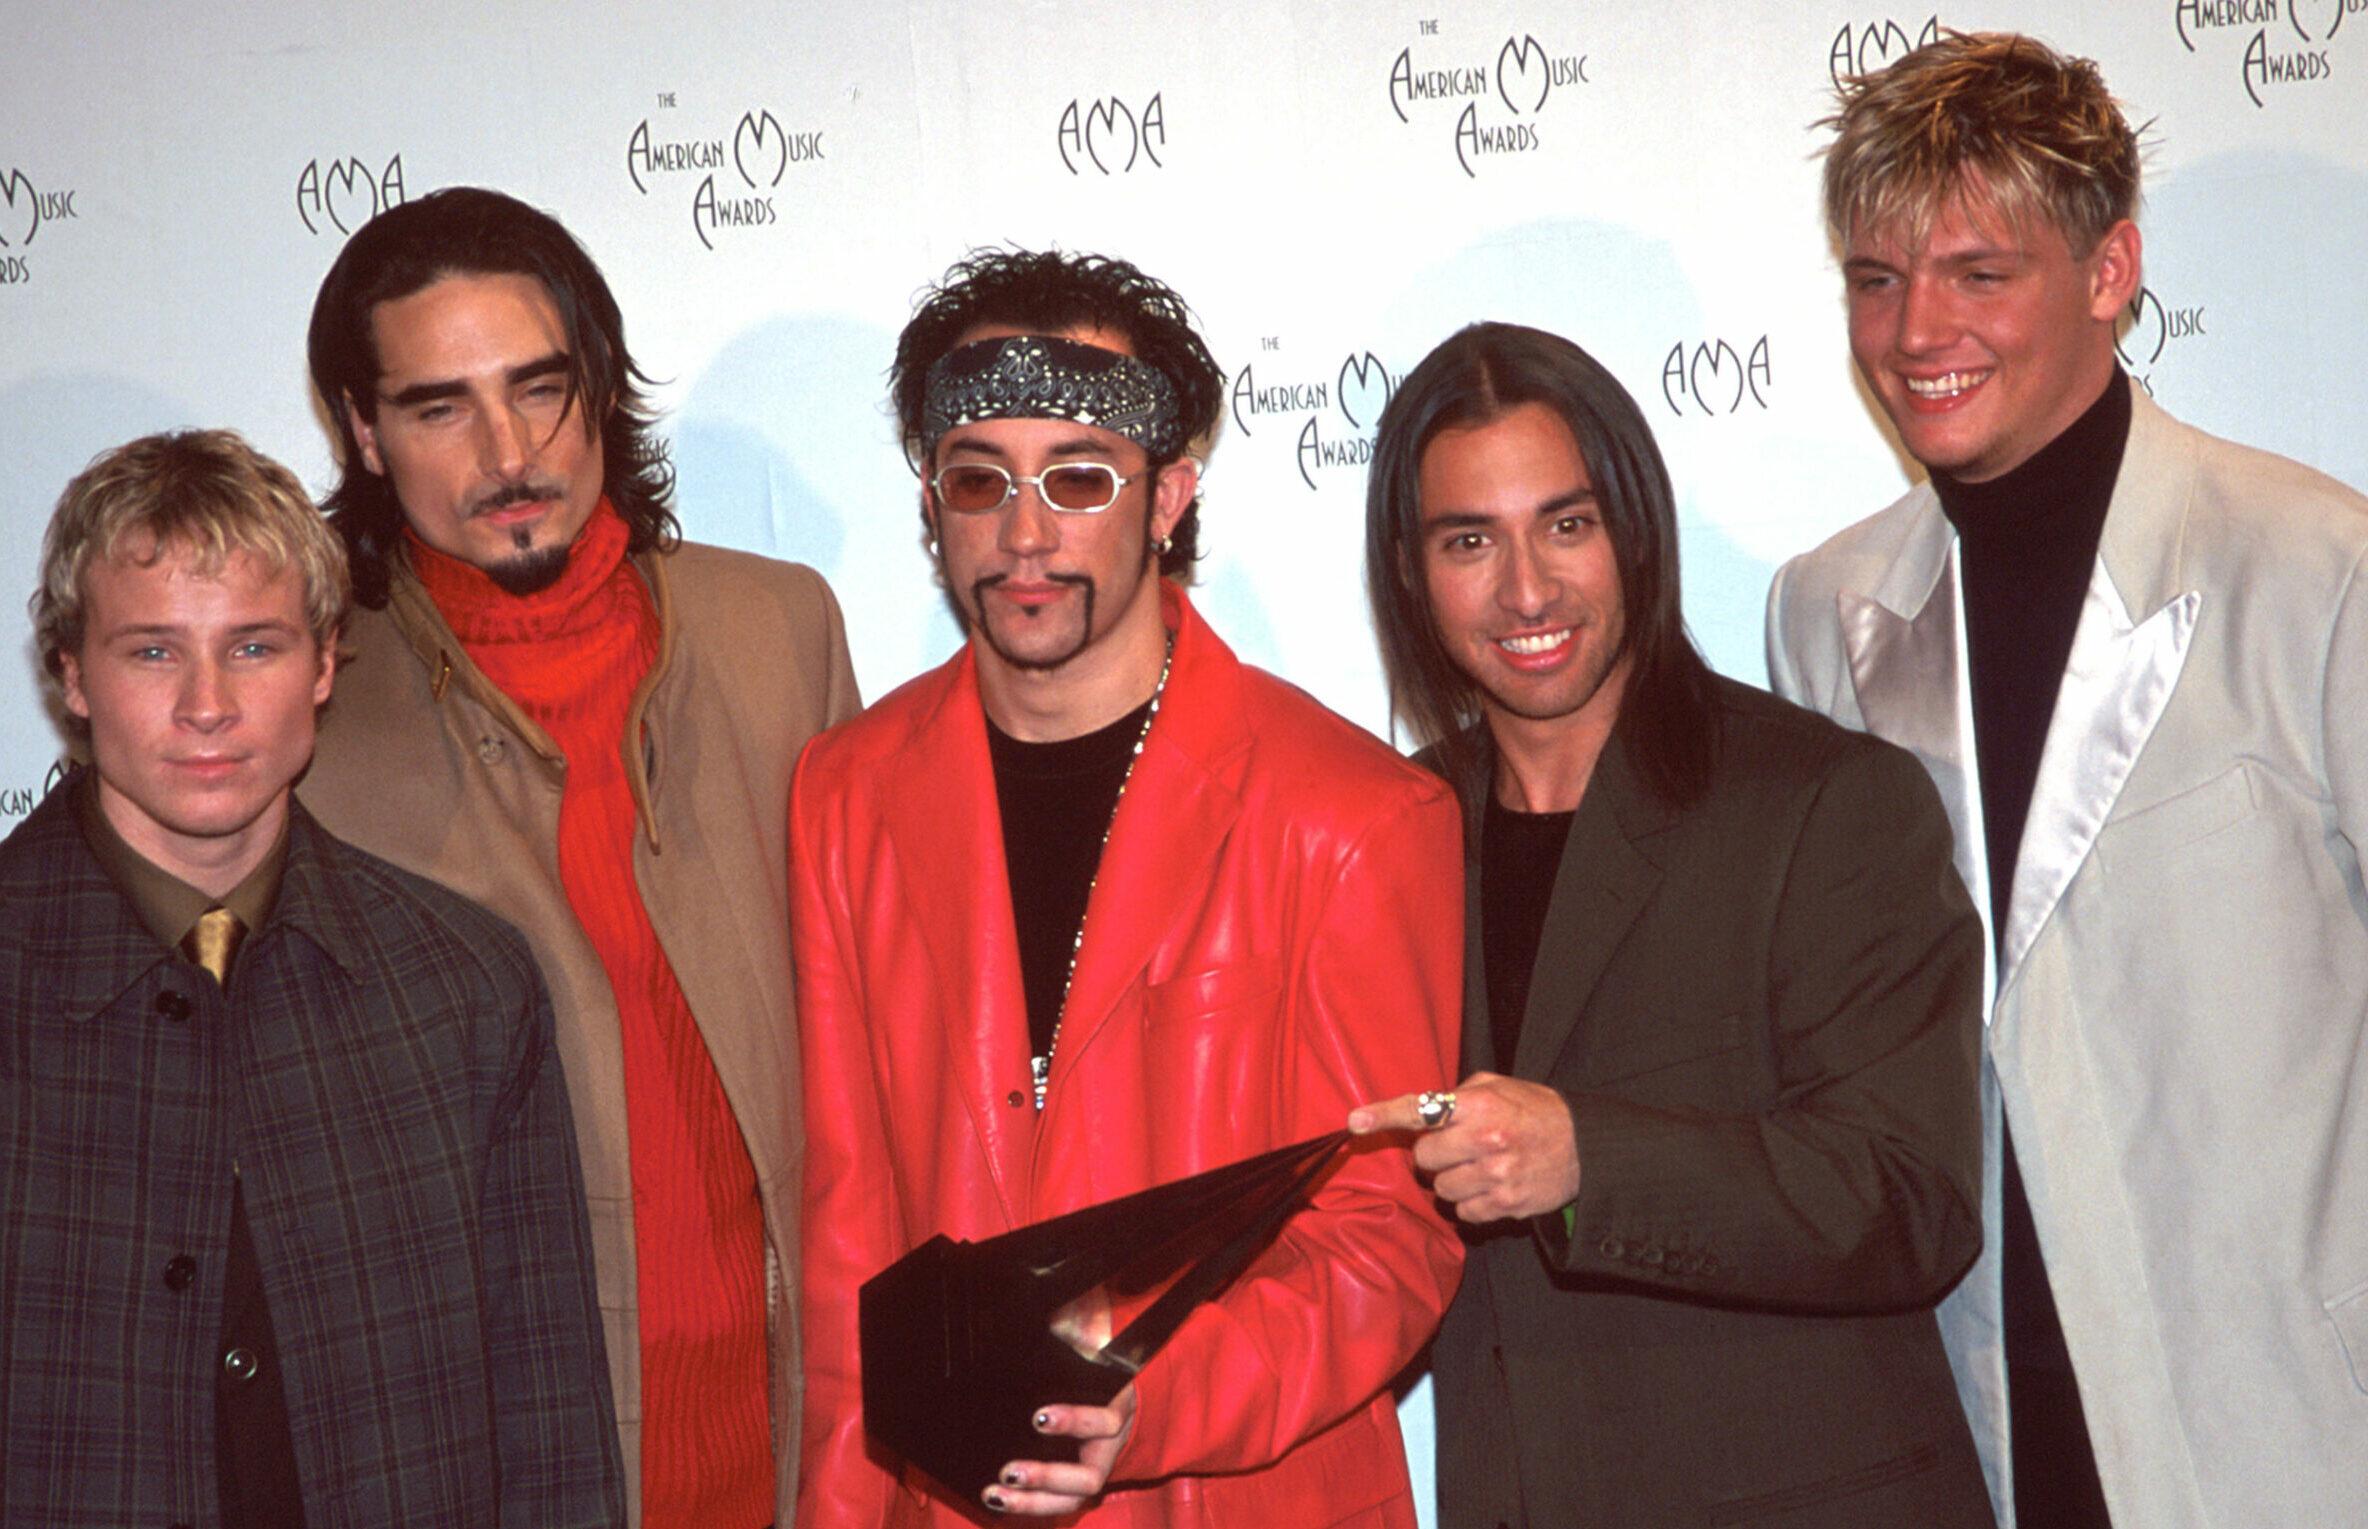 American Music Awards - Los Angeles. 08 Jan 2001 Pictured: Backstreet Boys.